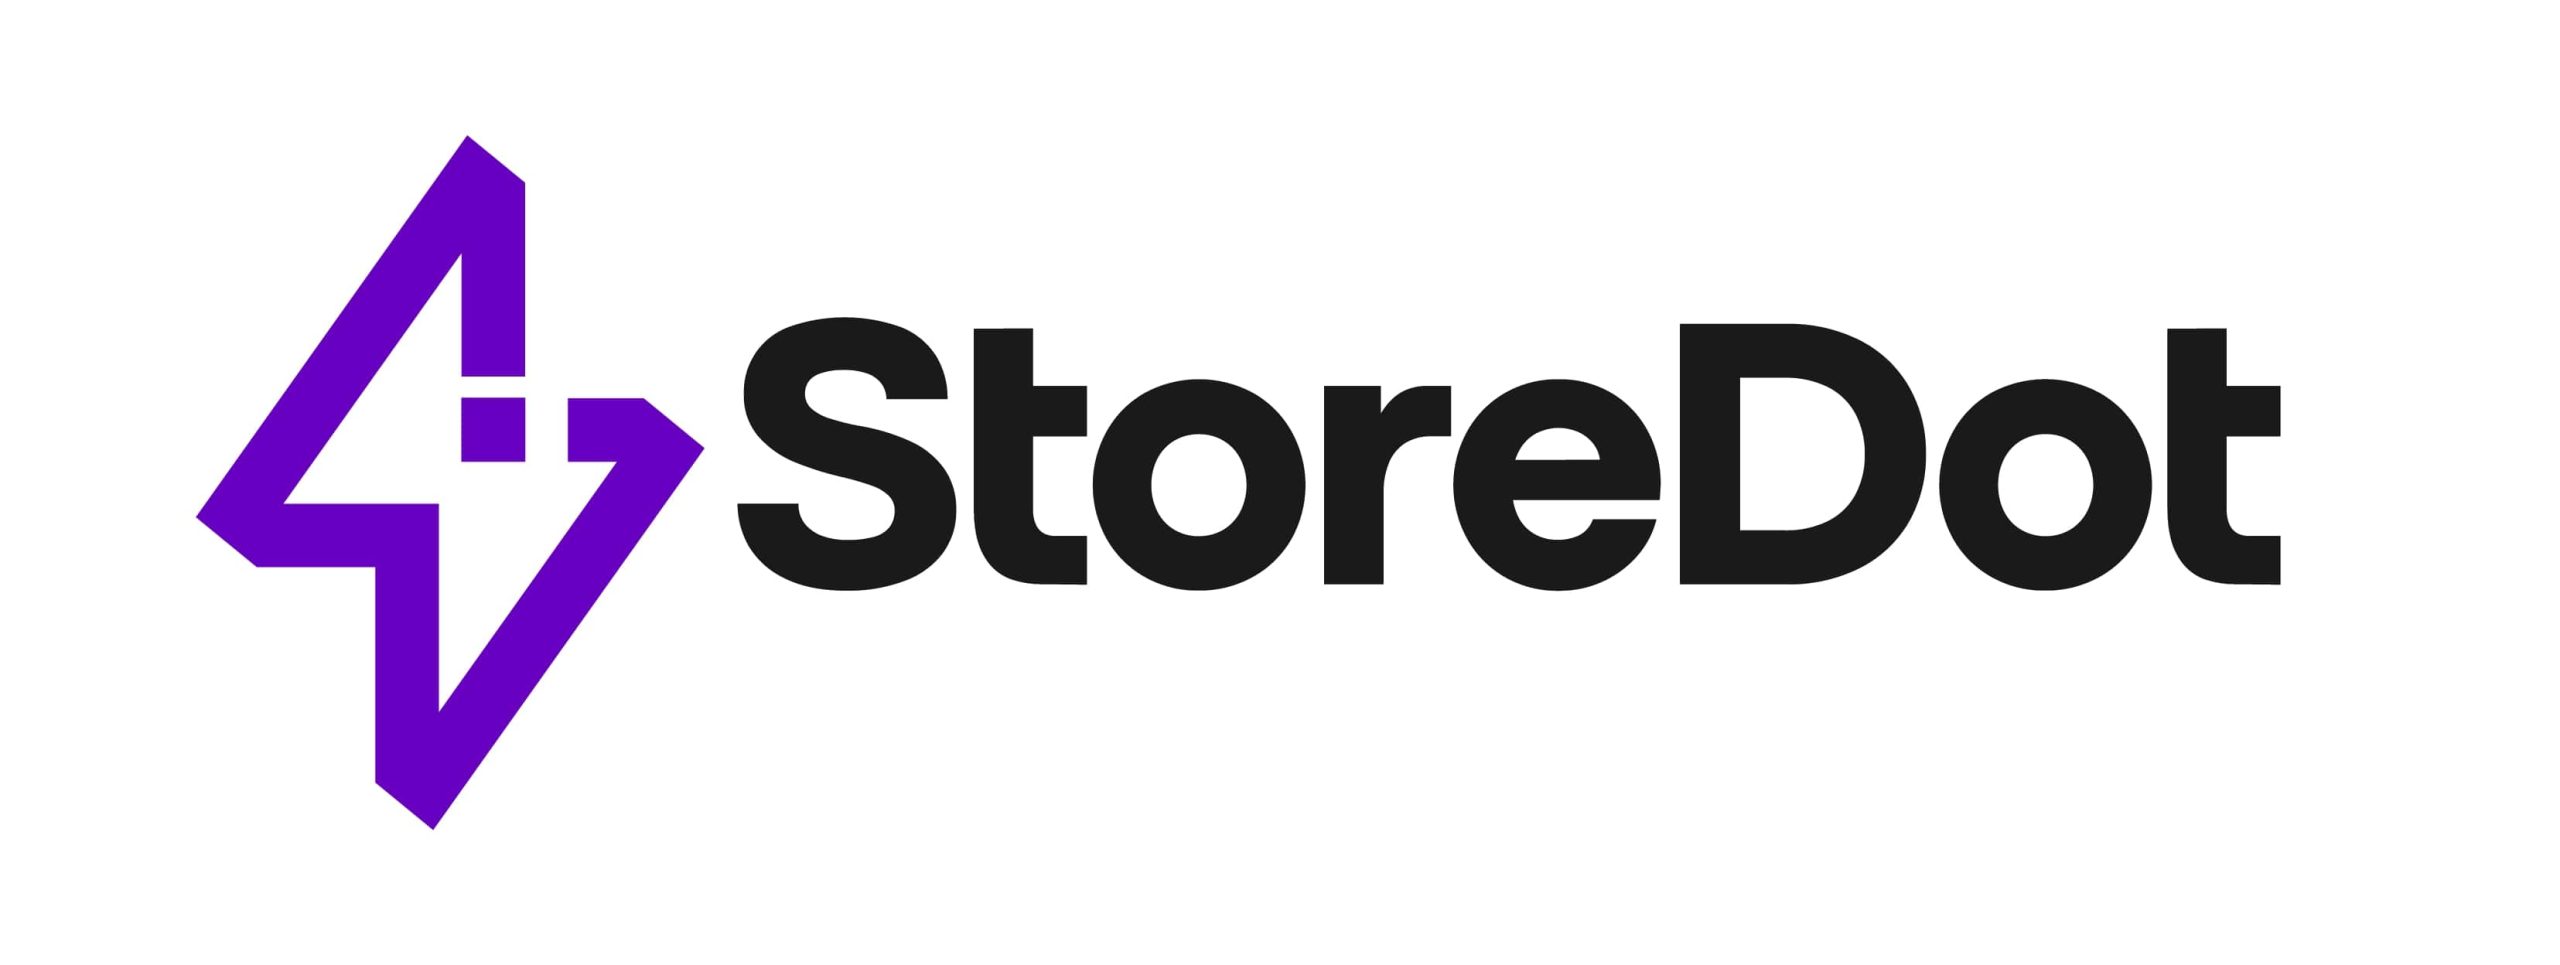 StoreDot official logo